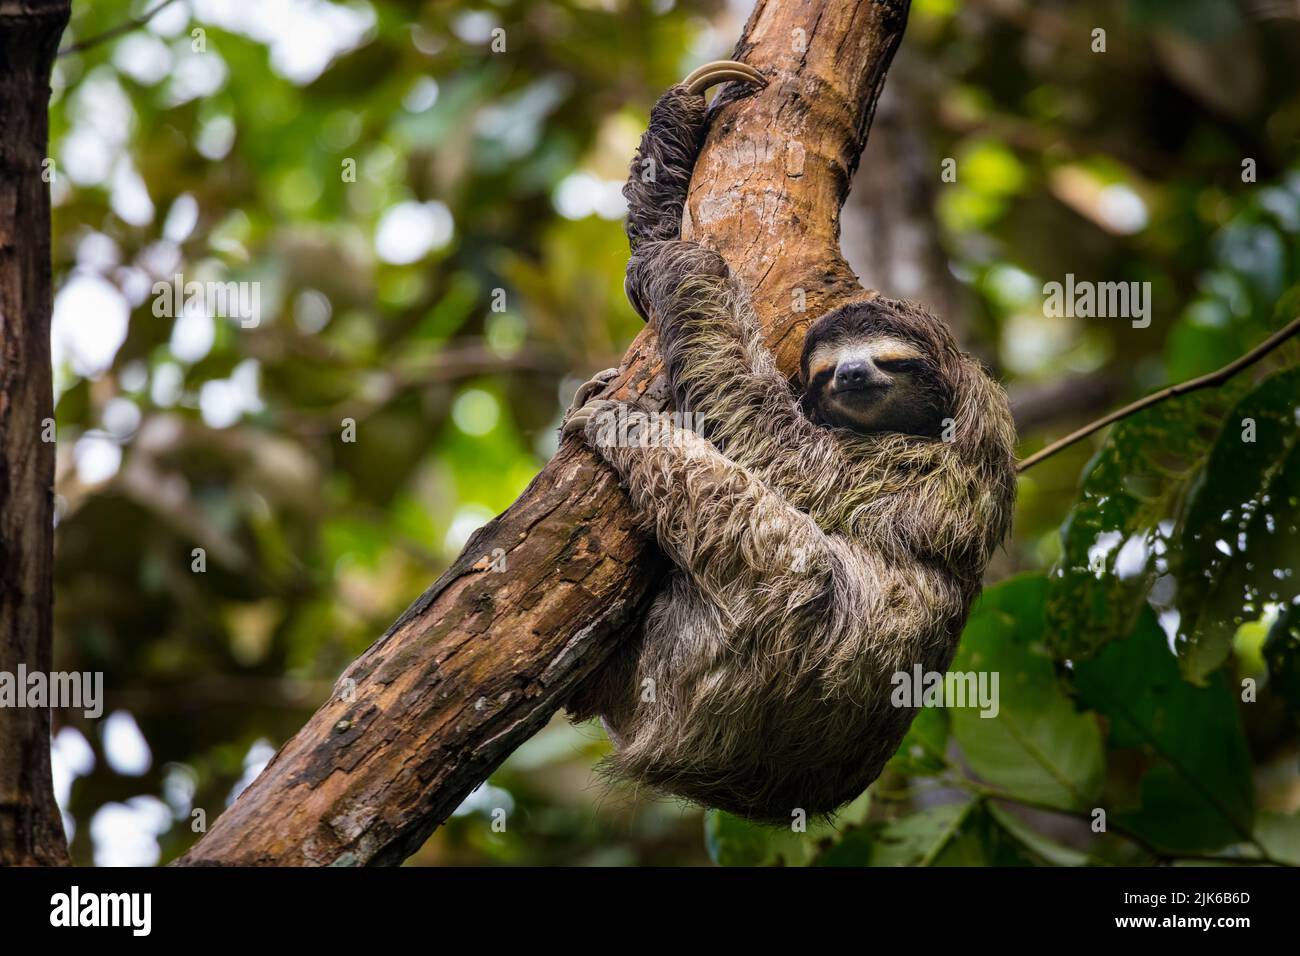 Panama wildlife with a three-toed sloth, Bradypus variegatus, climbing a tree in a rainforest near Albrook, Panama City, Republic of Panama. Stock Photo